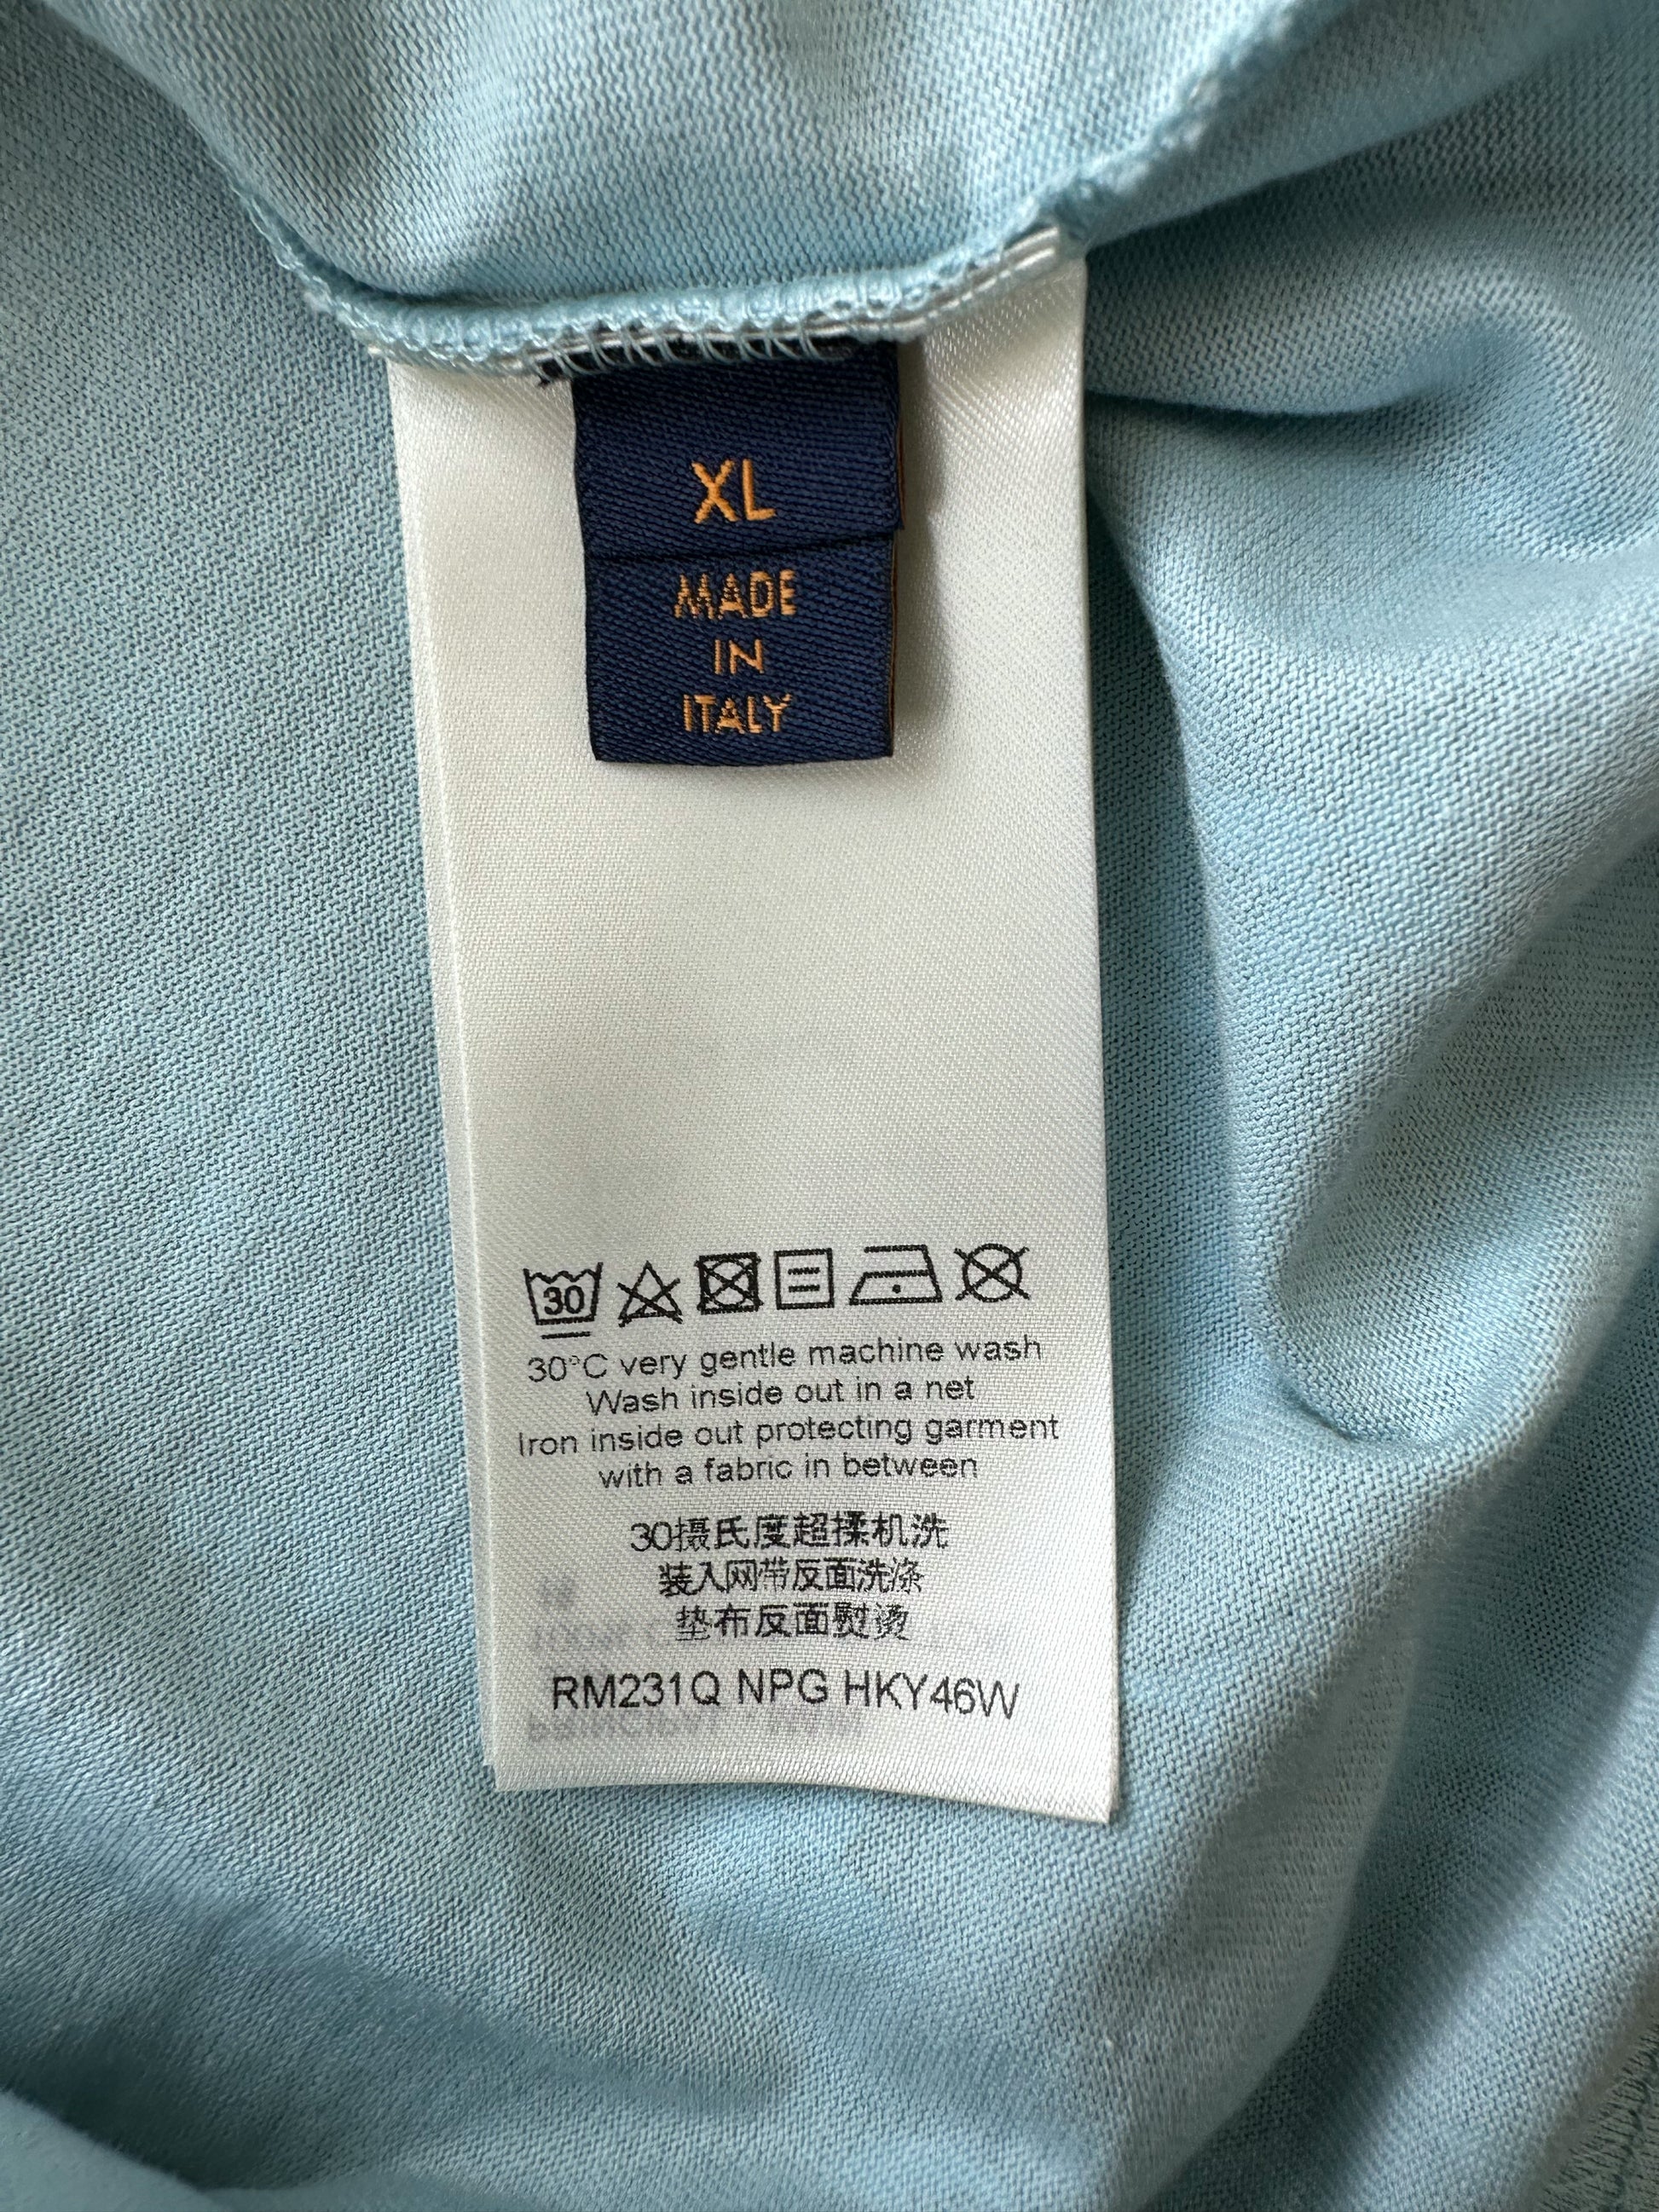 Louis Vuitton 1AATQN Monogram Gradient T-Shirt , Blue, S